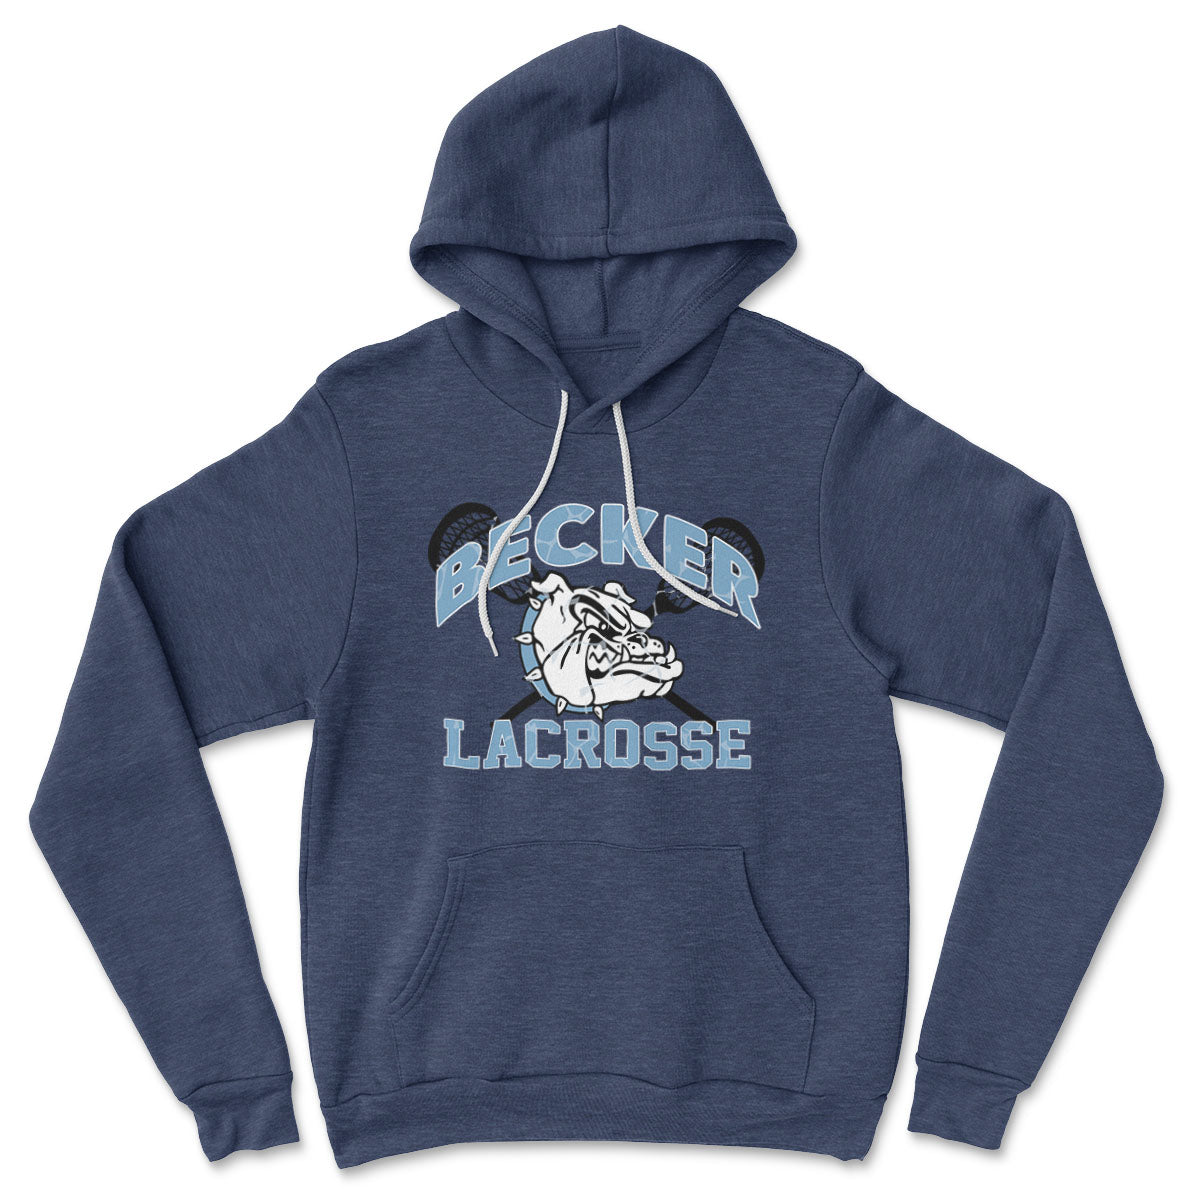 Becker Lacrosse // Adult Fleece Hoodie